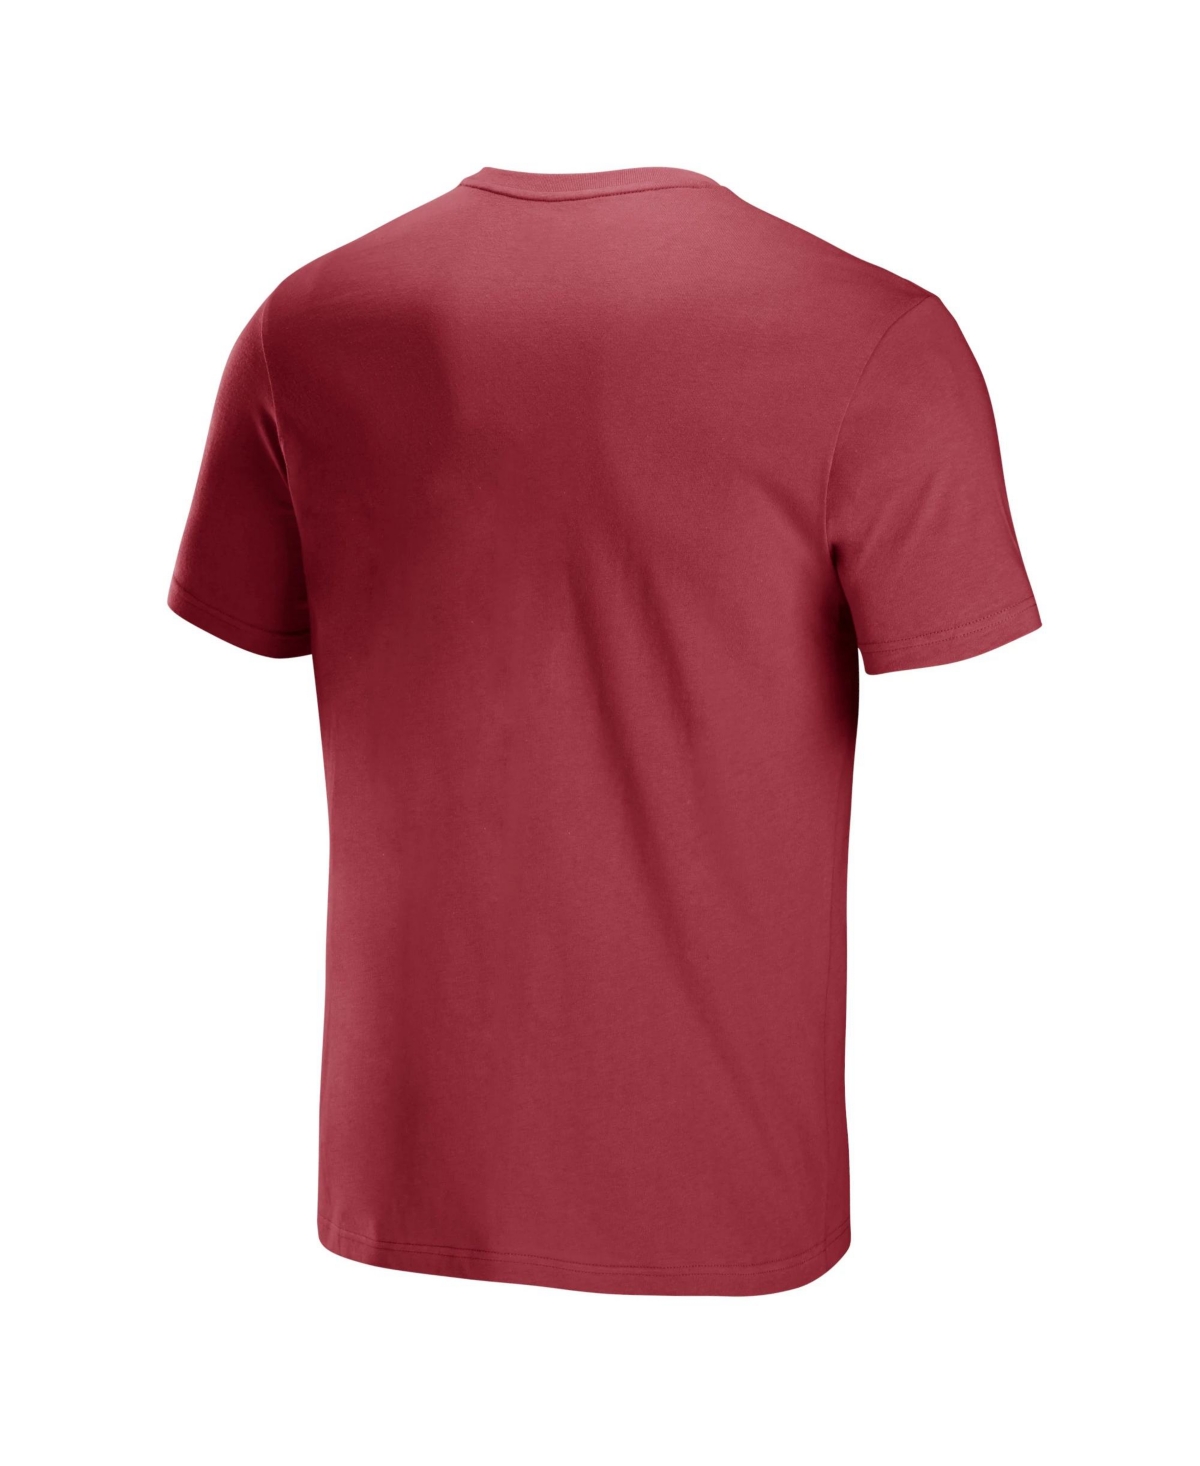 Shop Nfl Properties Men's Nfl X Staple Cardinal Arizona Cardinals Lockup Logo Short Sleeve T-shirt